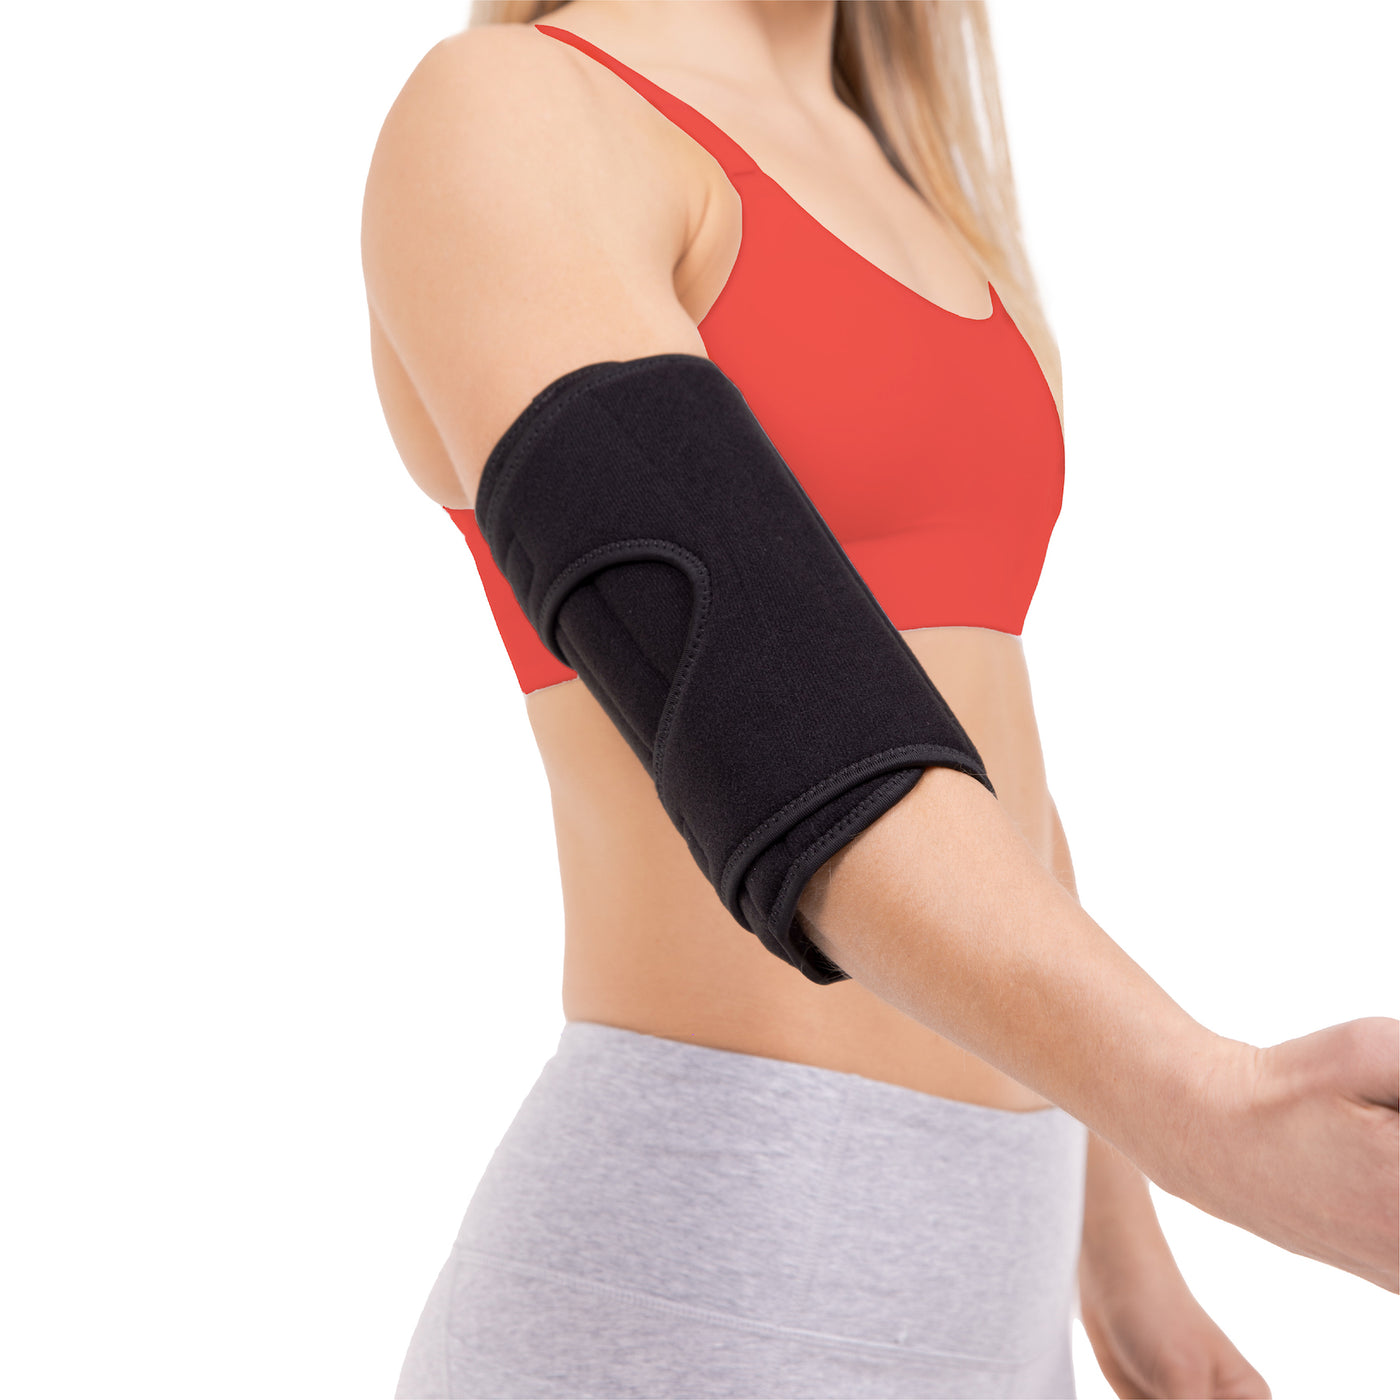 Generic Comfortable Elbow Splint Brace, Night Elbow Sleep Support